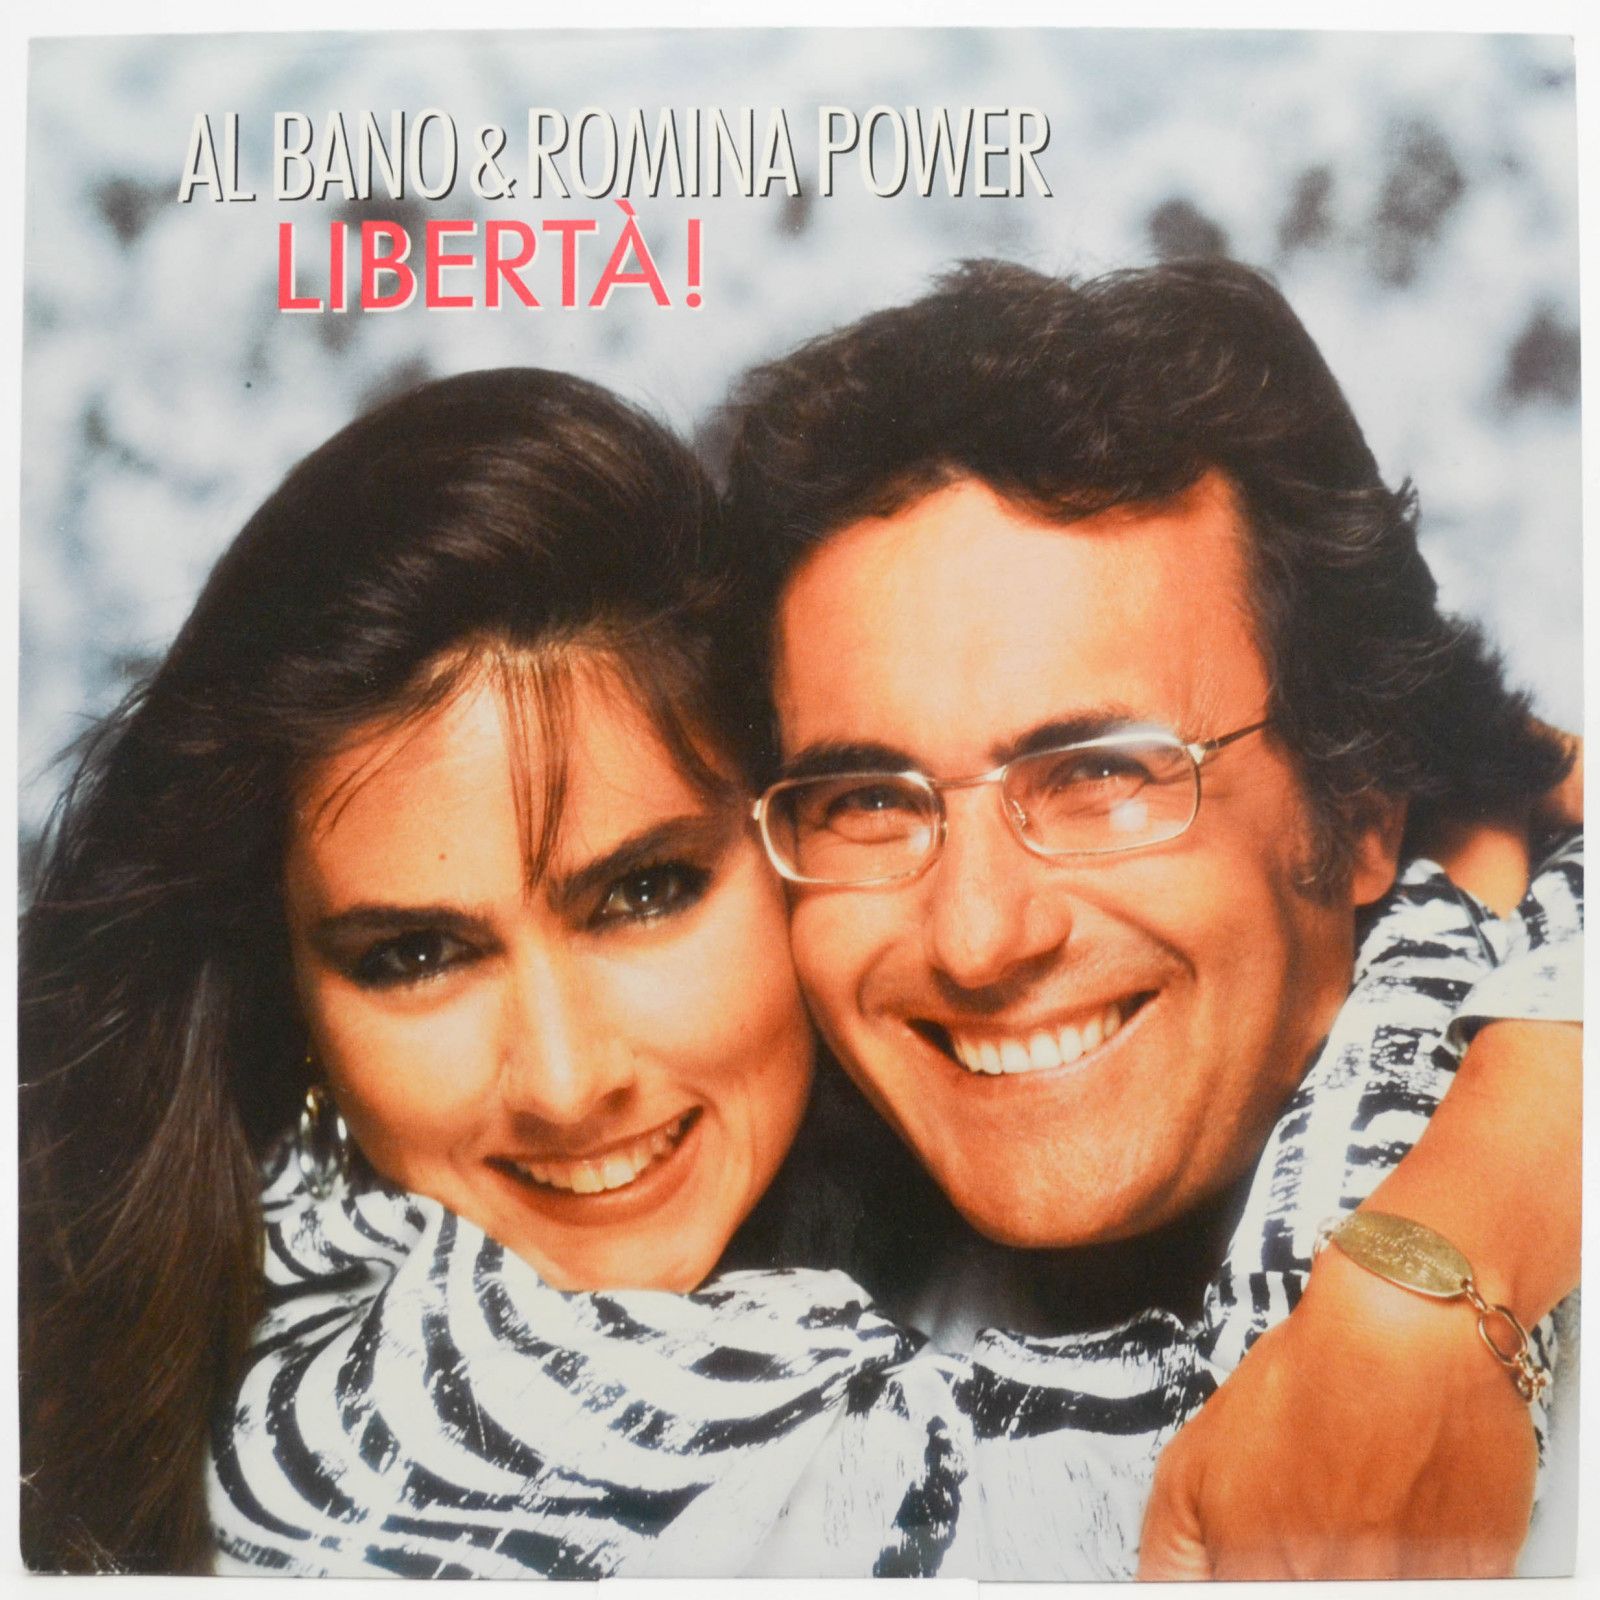 Al Bano & Romina Power — Libertà!, 1987